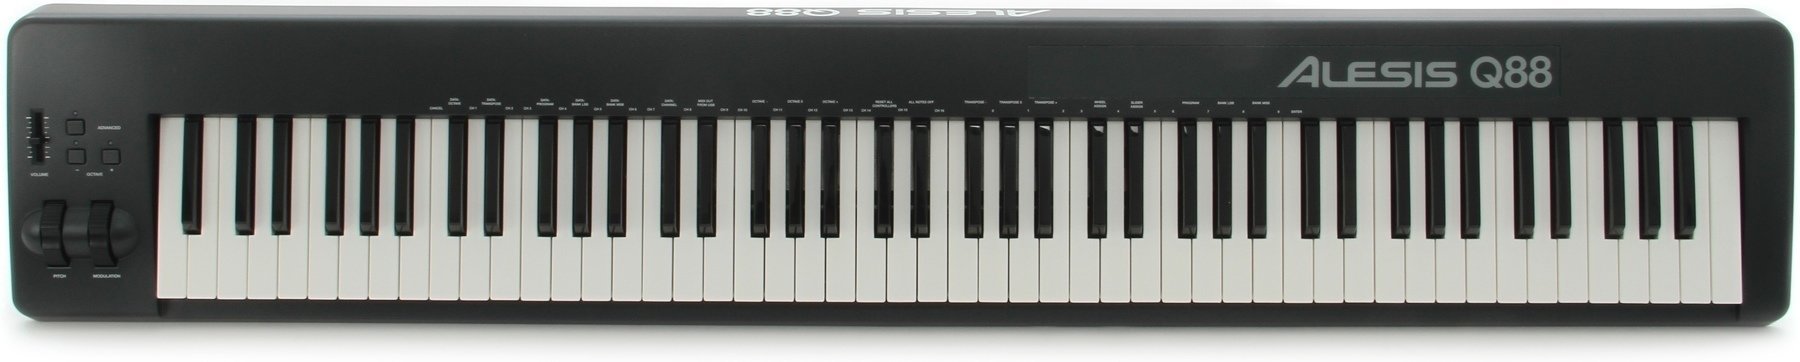 MIDI-Keyboard Alesis Q88 USB/MIDI Keyboard Controller